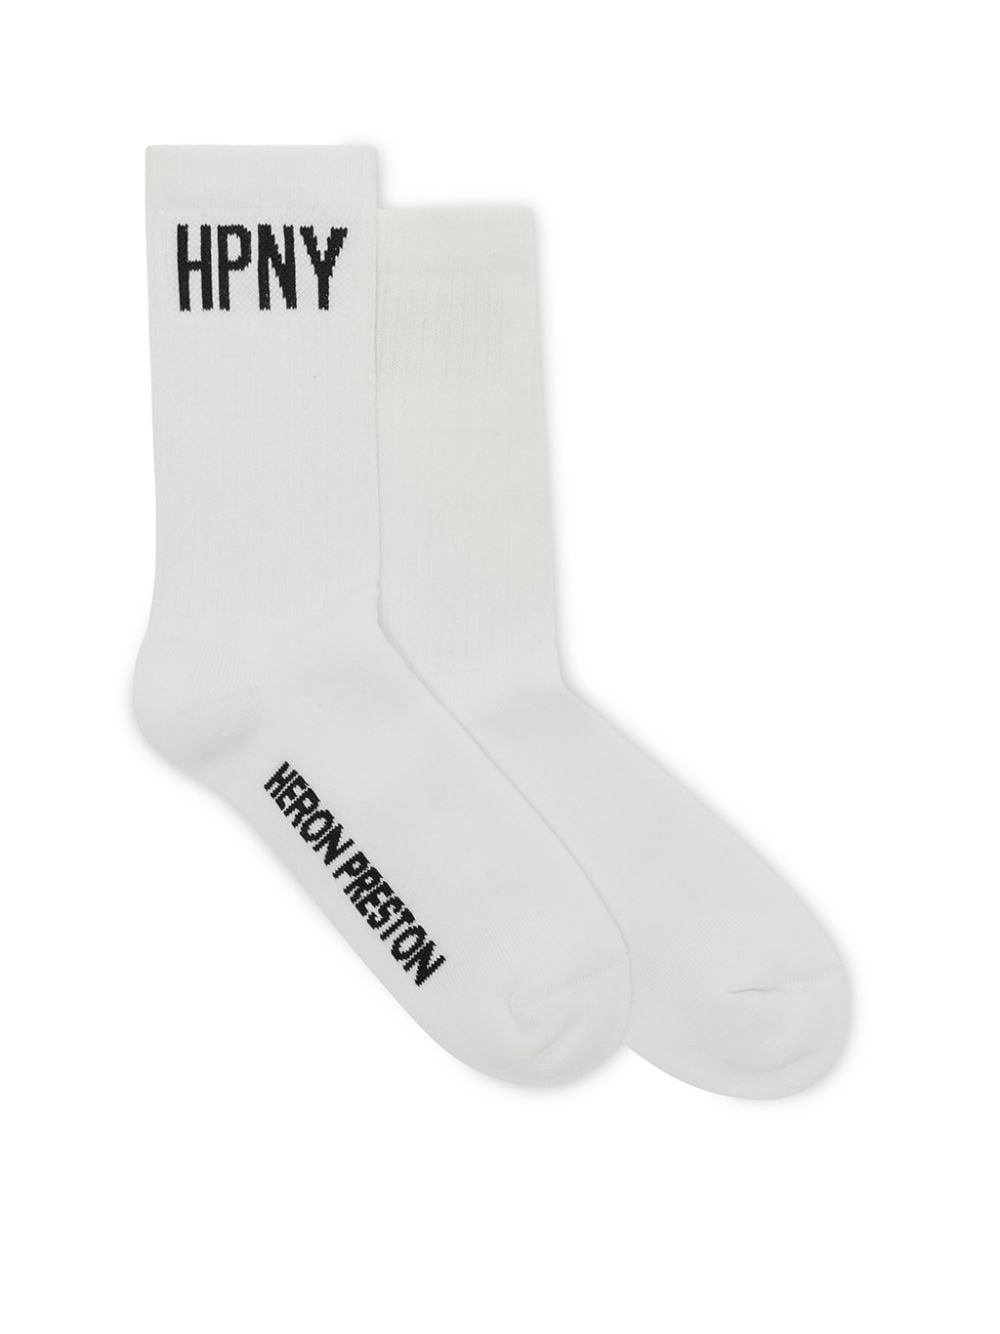 Hpny Long Socks - 1